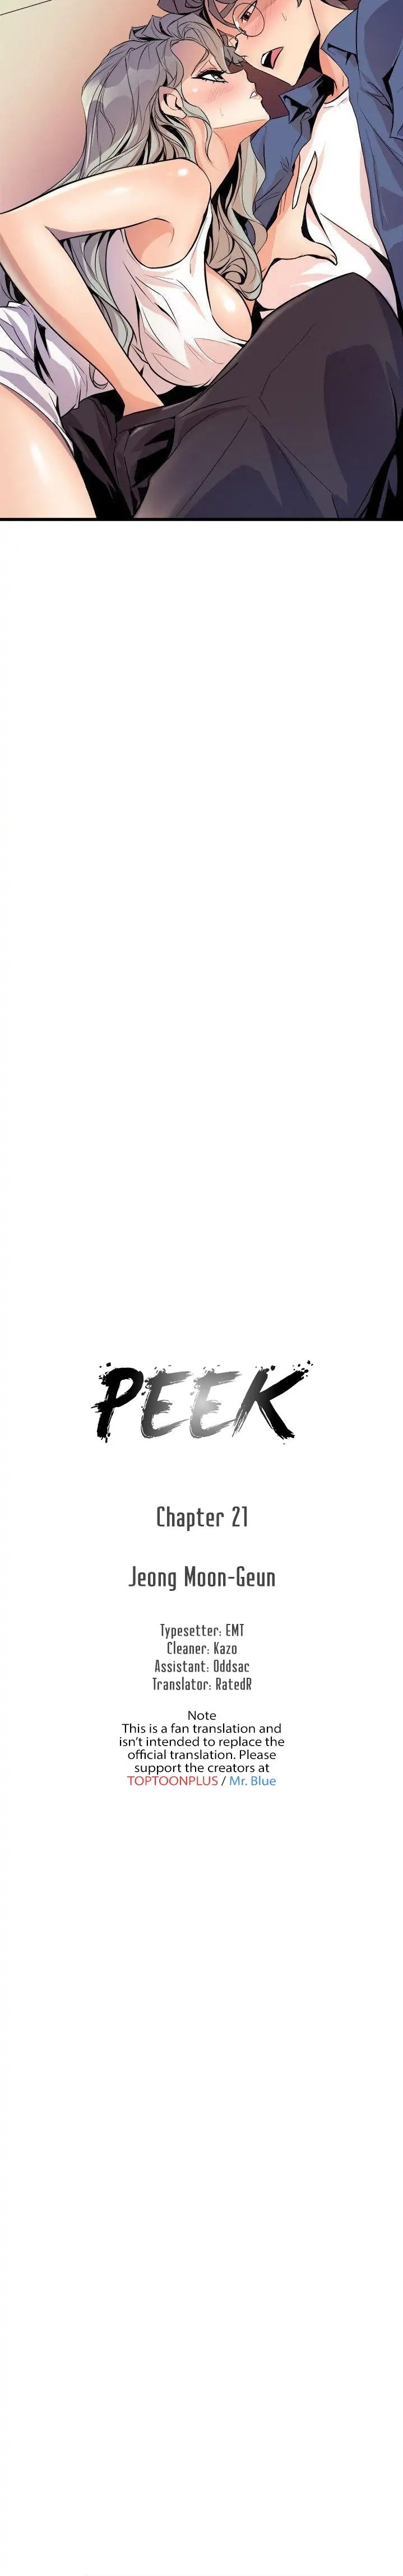 Peek - Chapter 21 Page 2